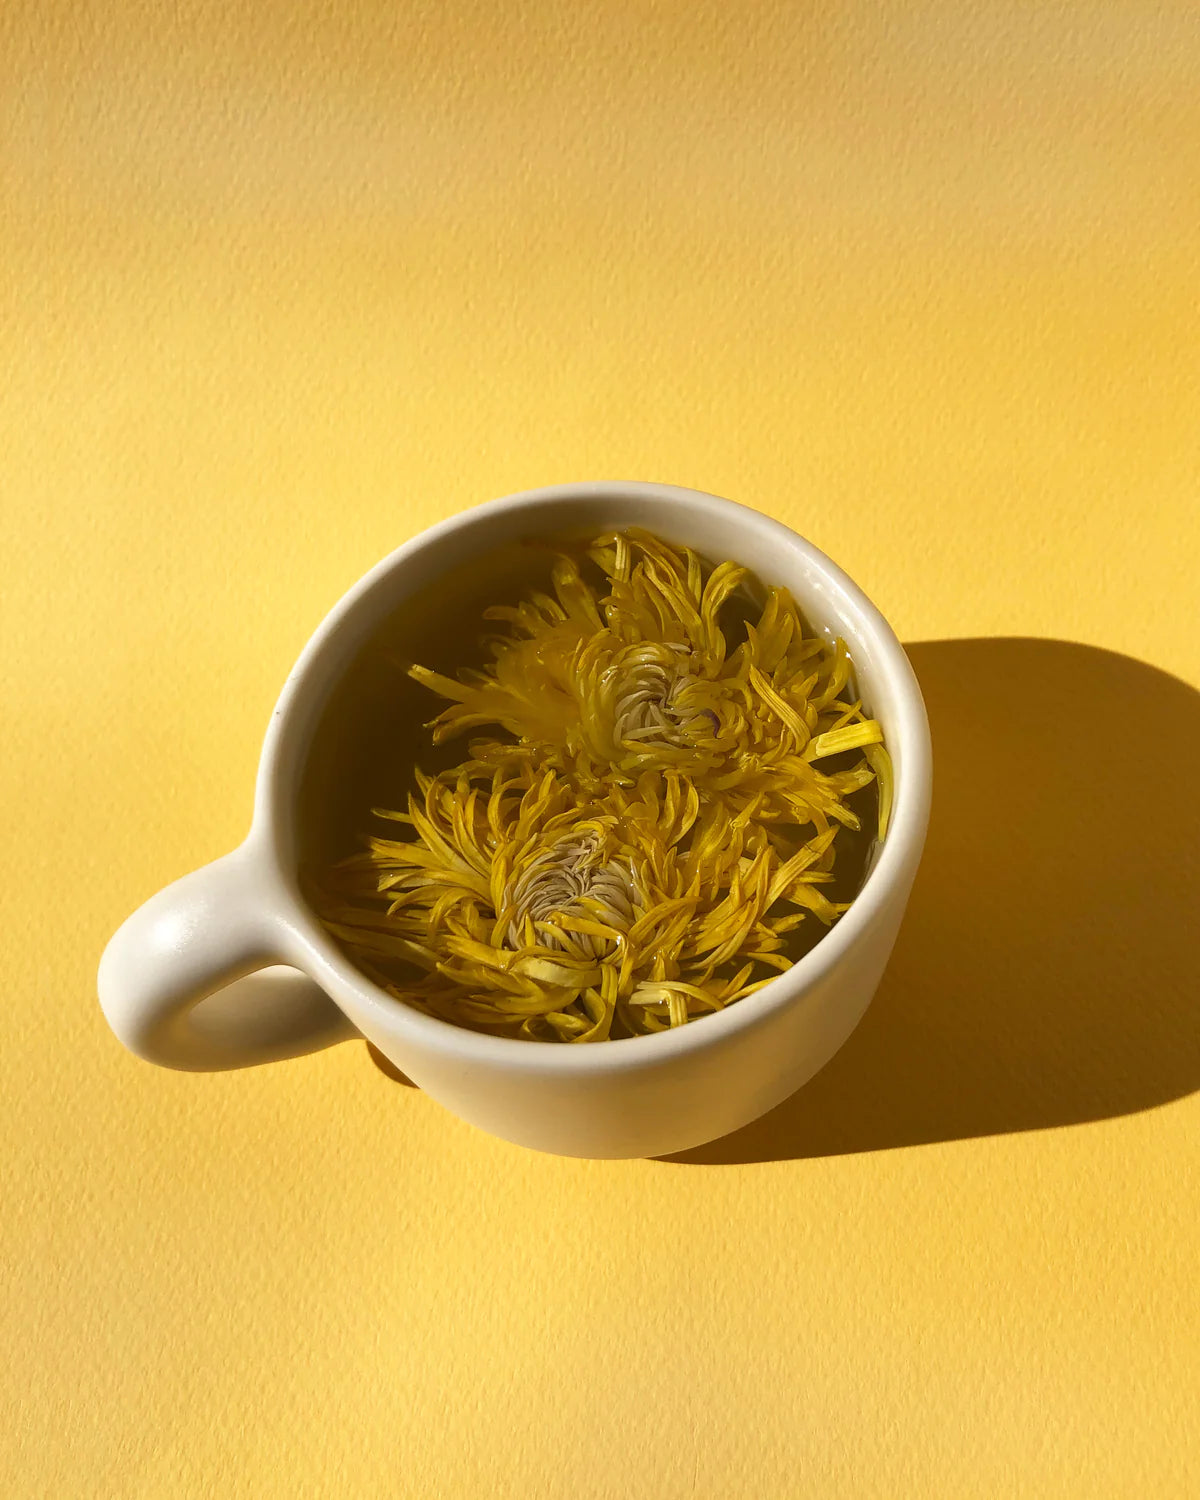 
                  
                    The Qi Whole Flower Tea
                  
                